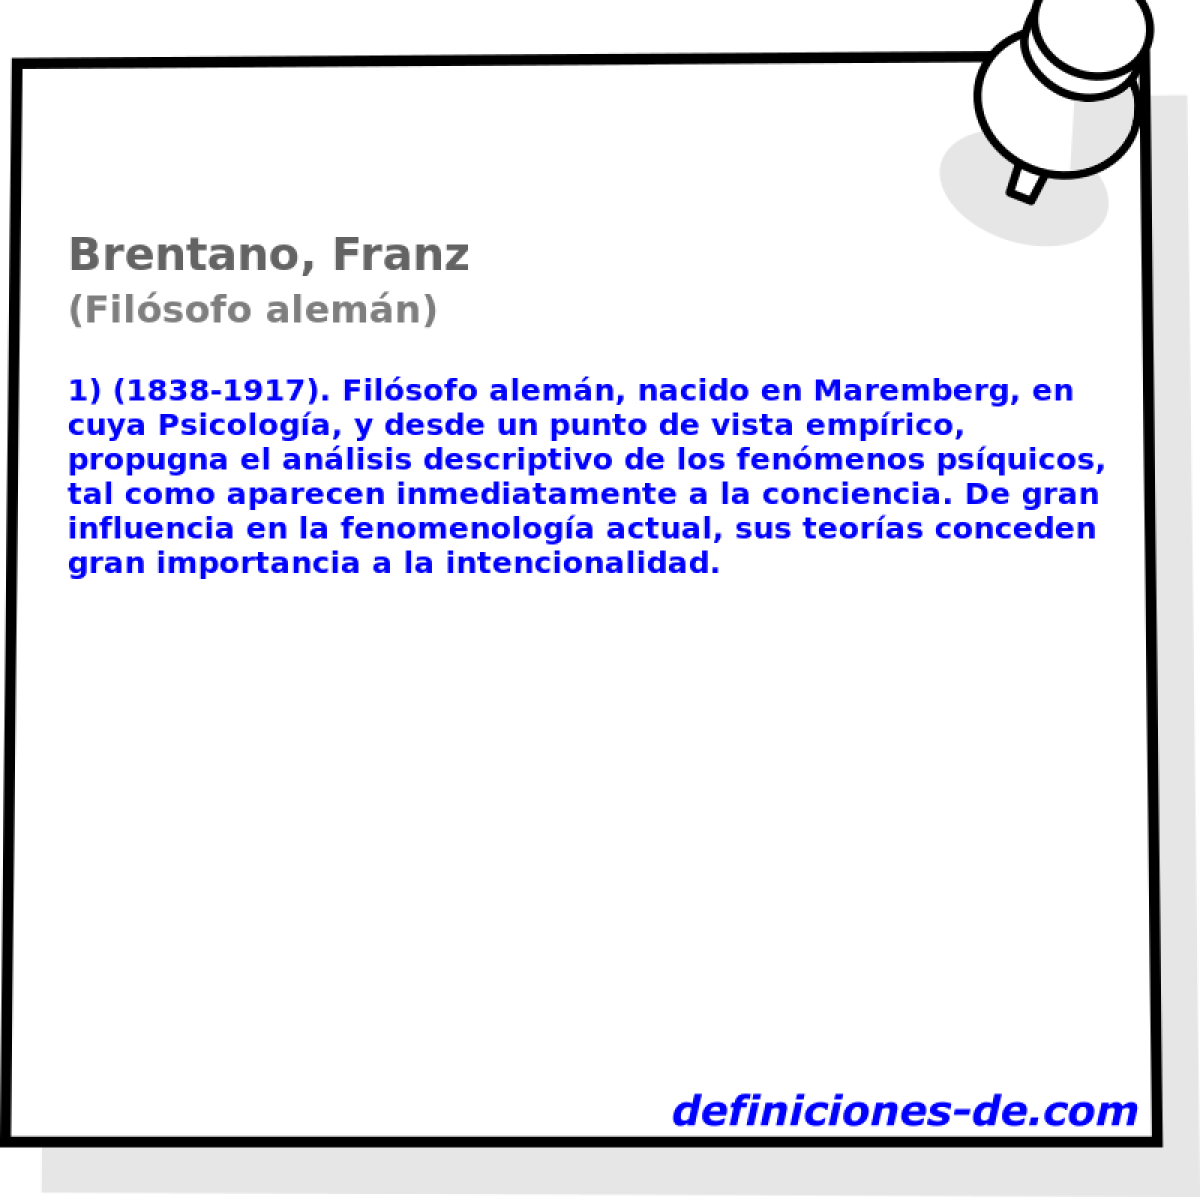 Brentano, Franz (Filsofo alemn)